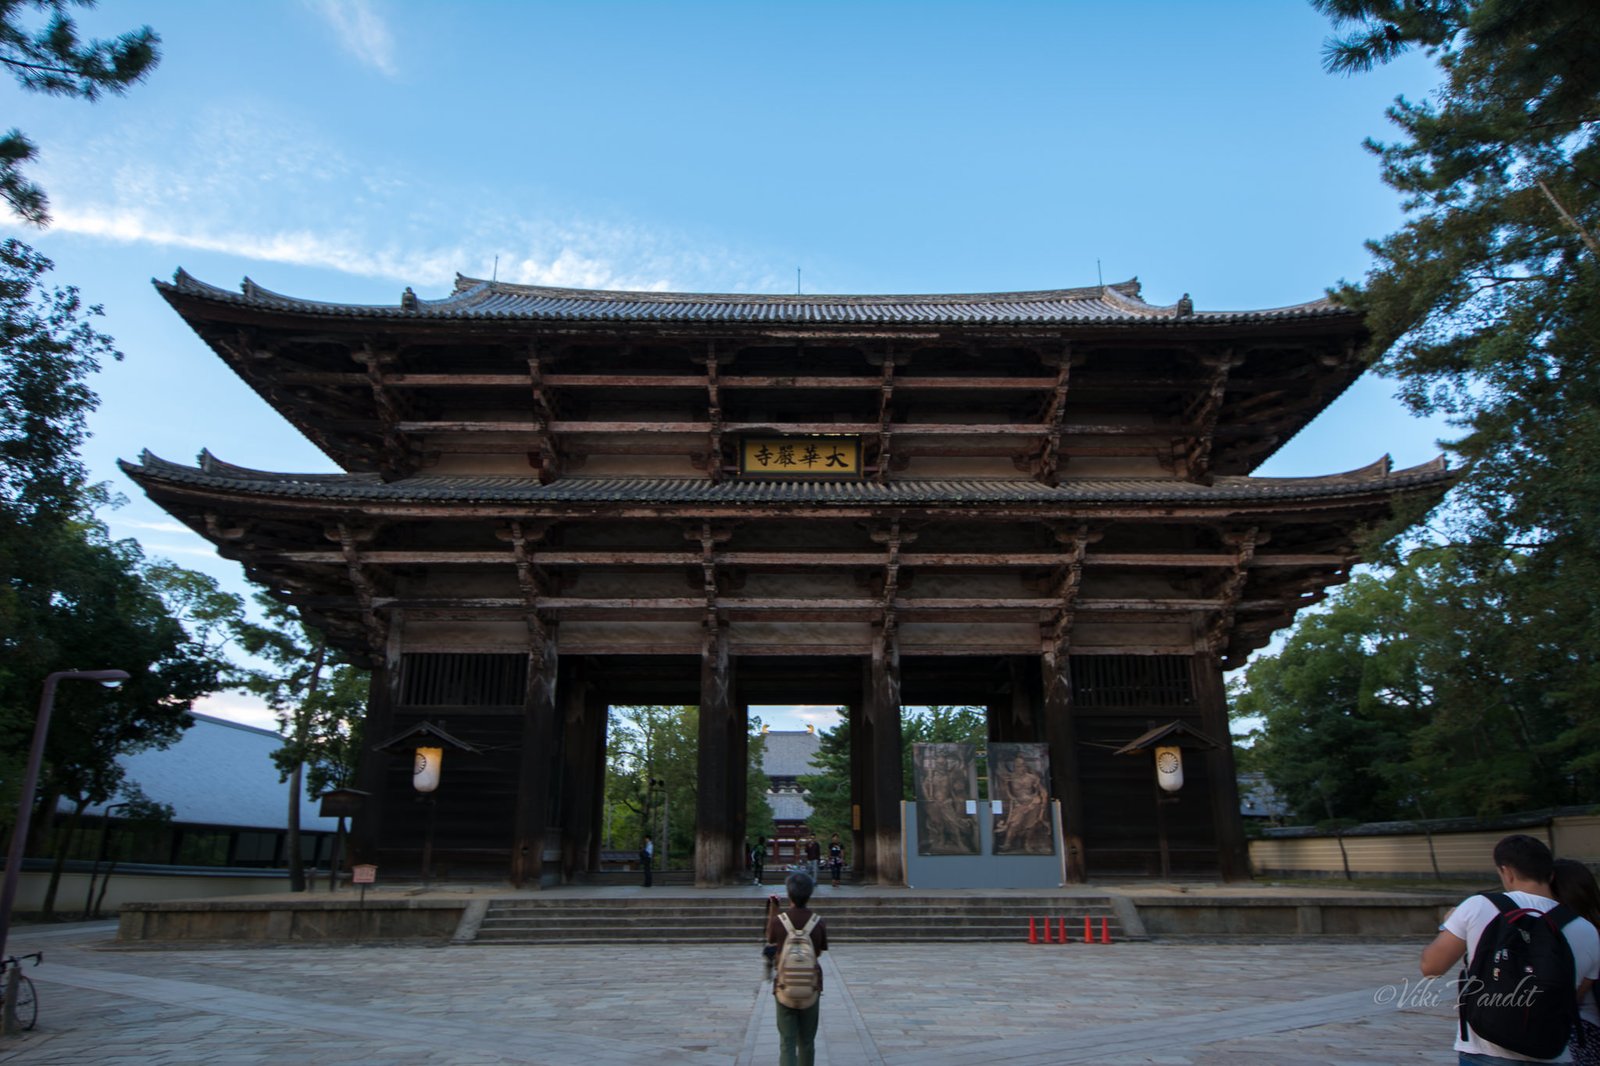 Nandai-mon Gate at Todai-ji